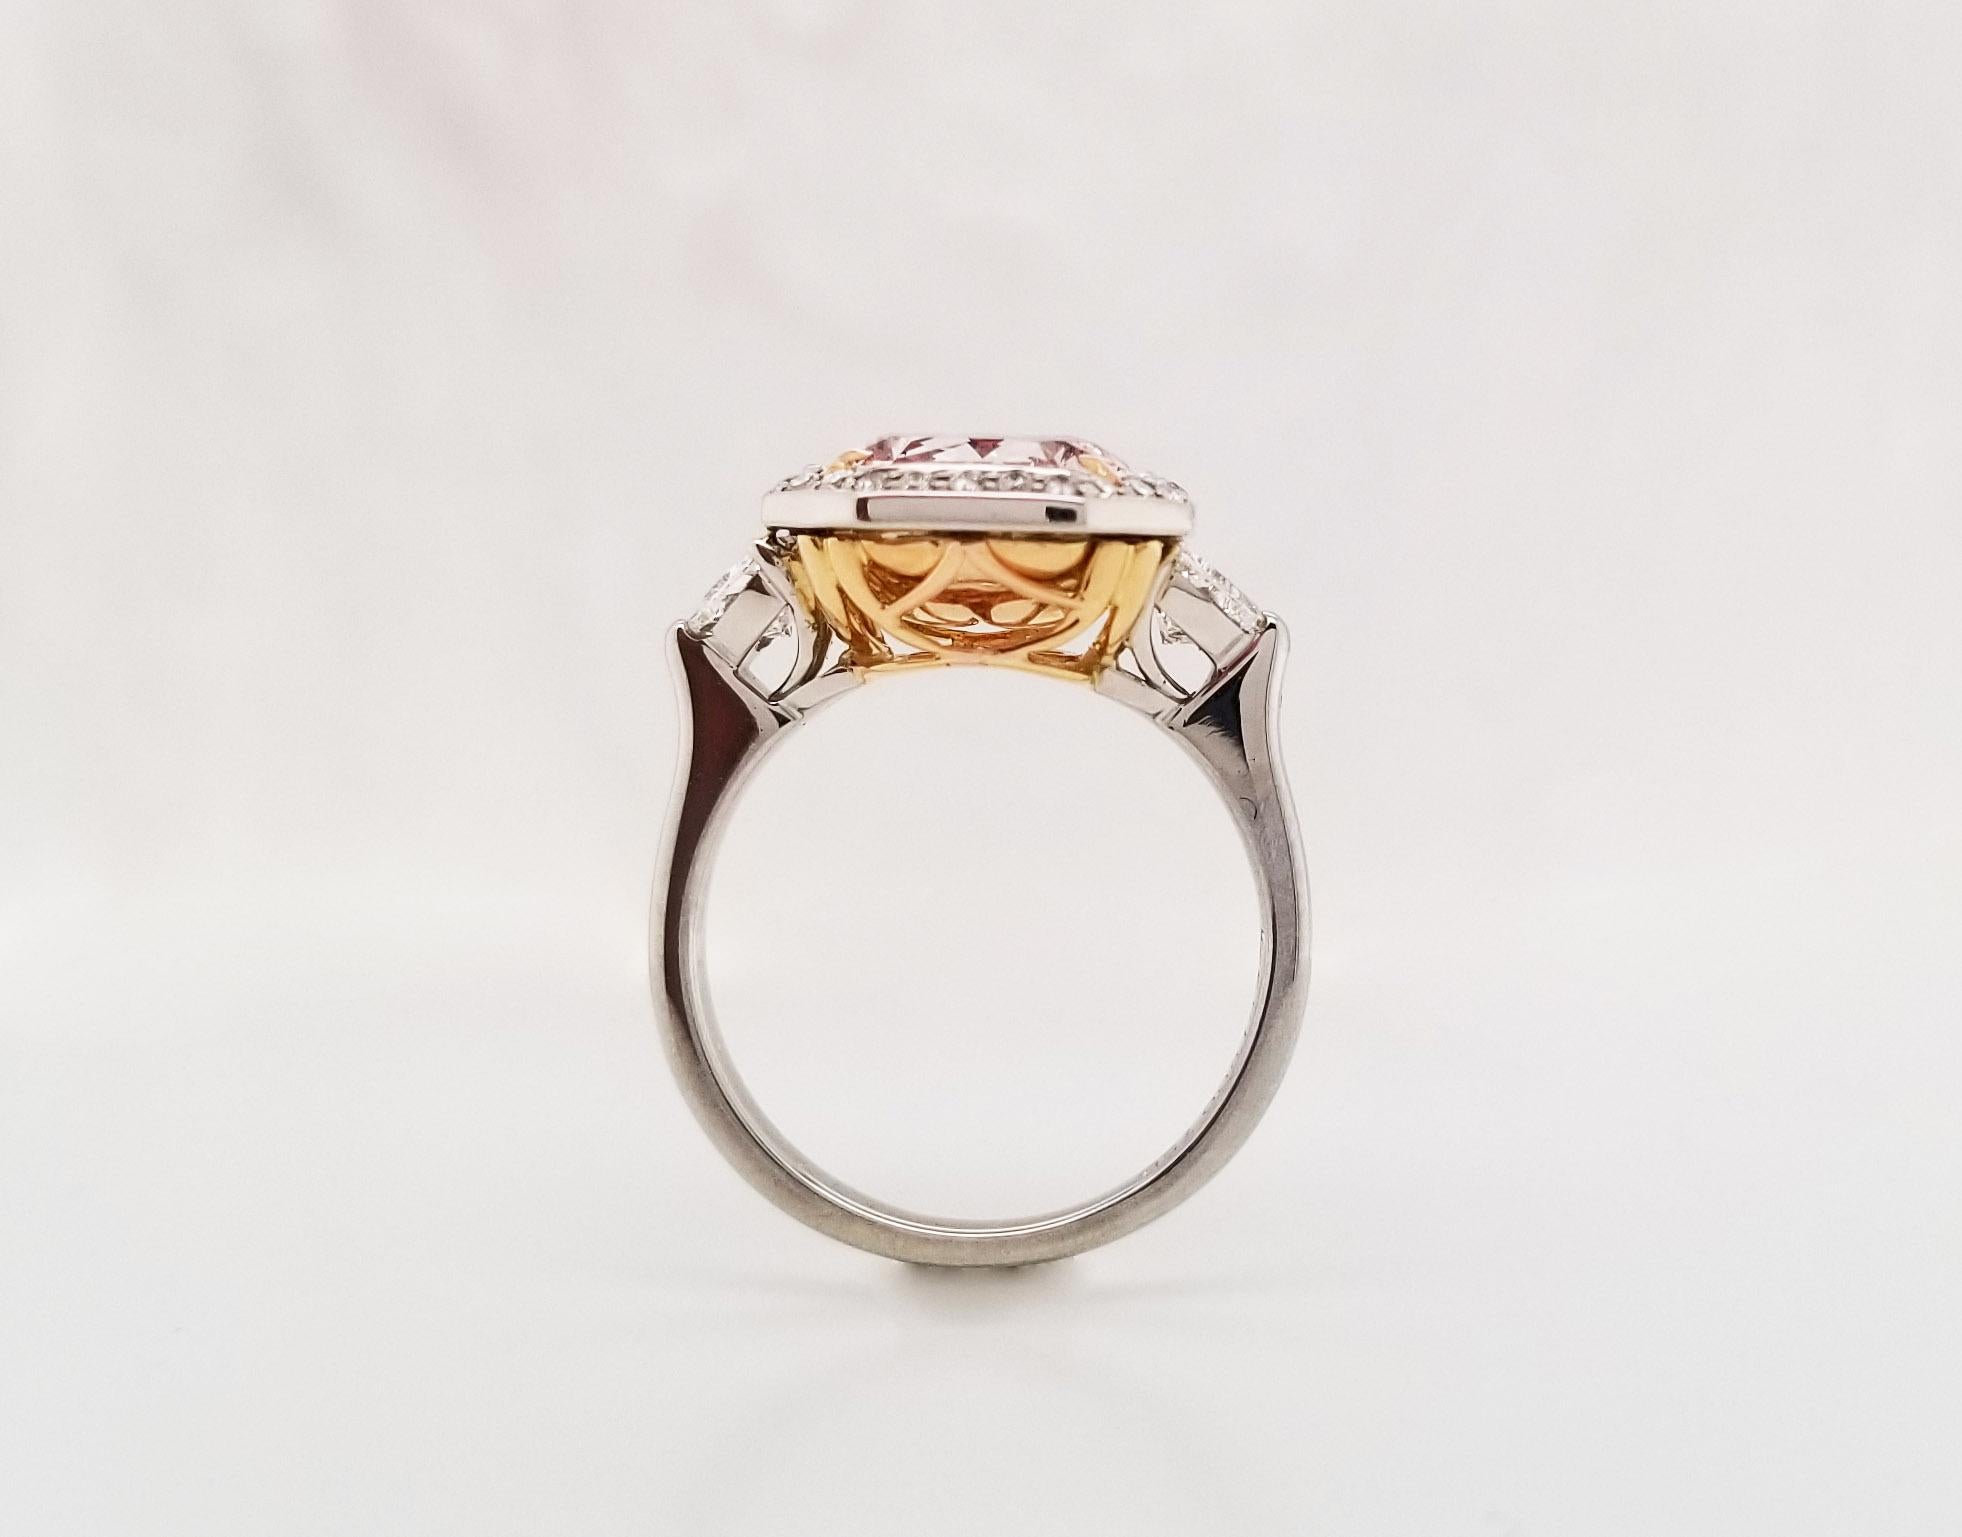 platinum ring with a 4-carat pink diamond